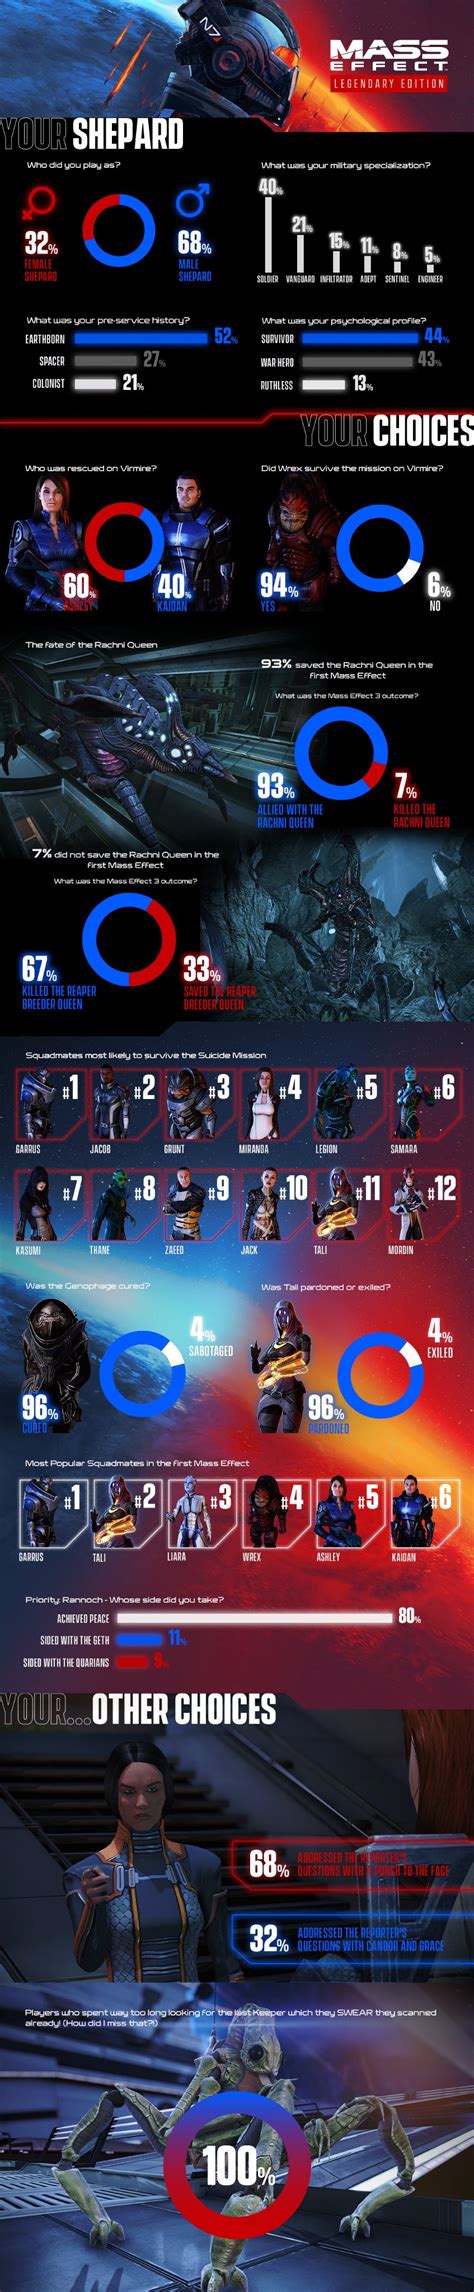 Mass Effect Legendary Edition Stats Show Most Popular Shepard Key